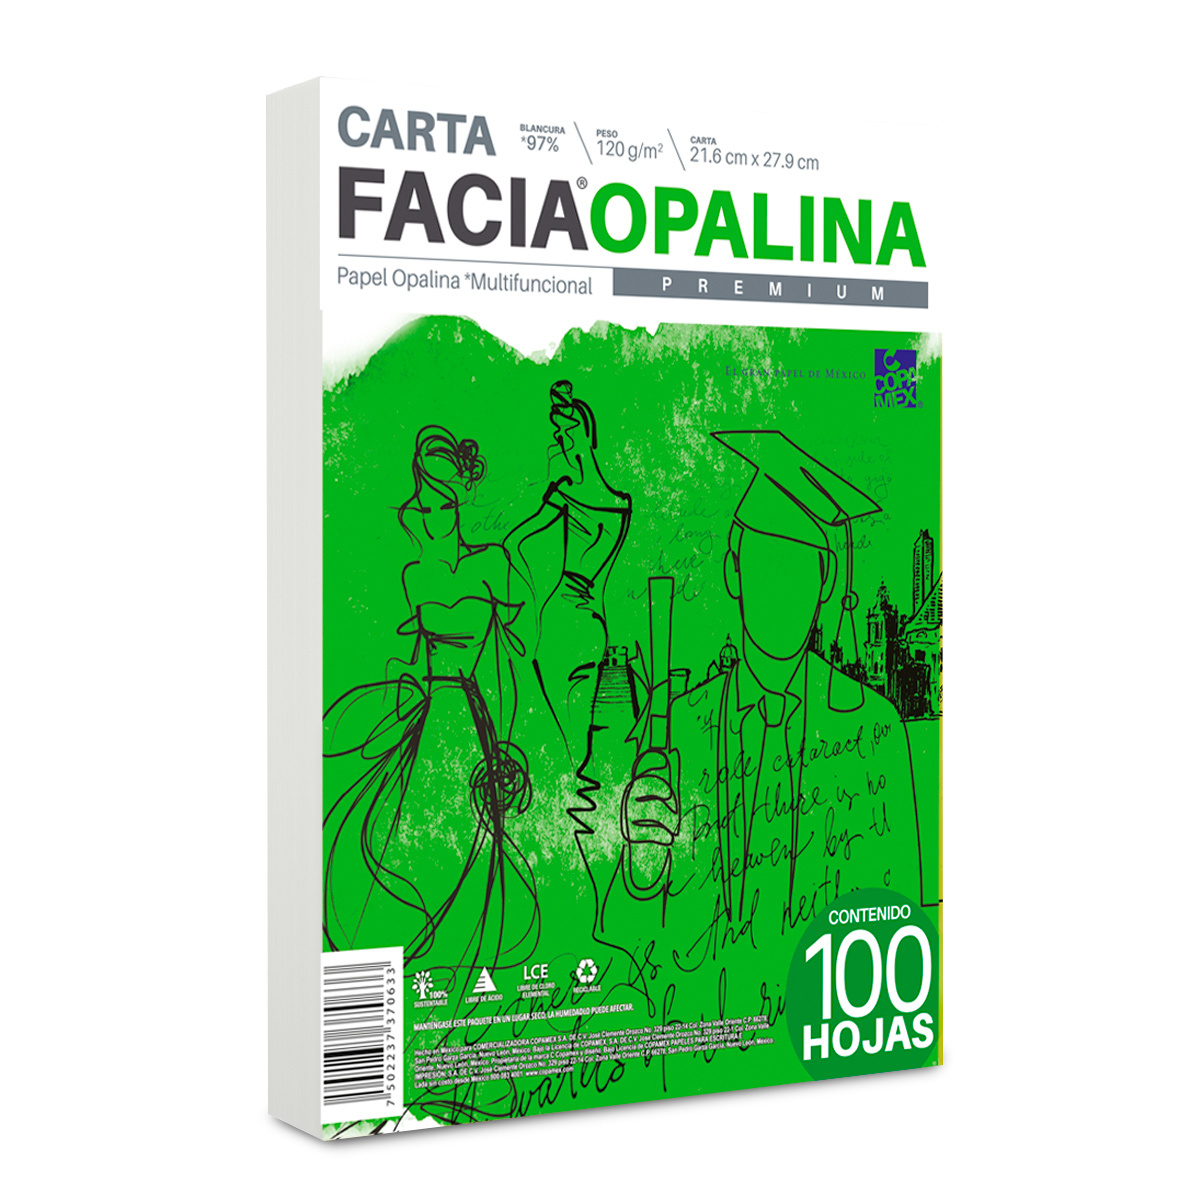 Papel Opalina Copamex Facia Premium Multifuncional / 100 hojas / Carta / Blanco / 120 gr